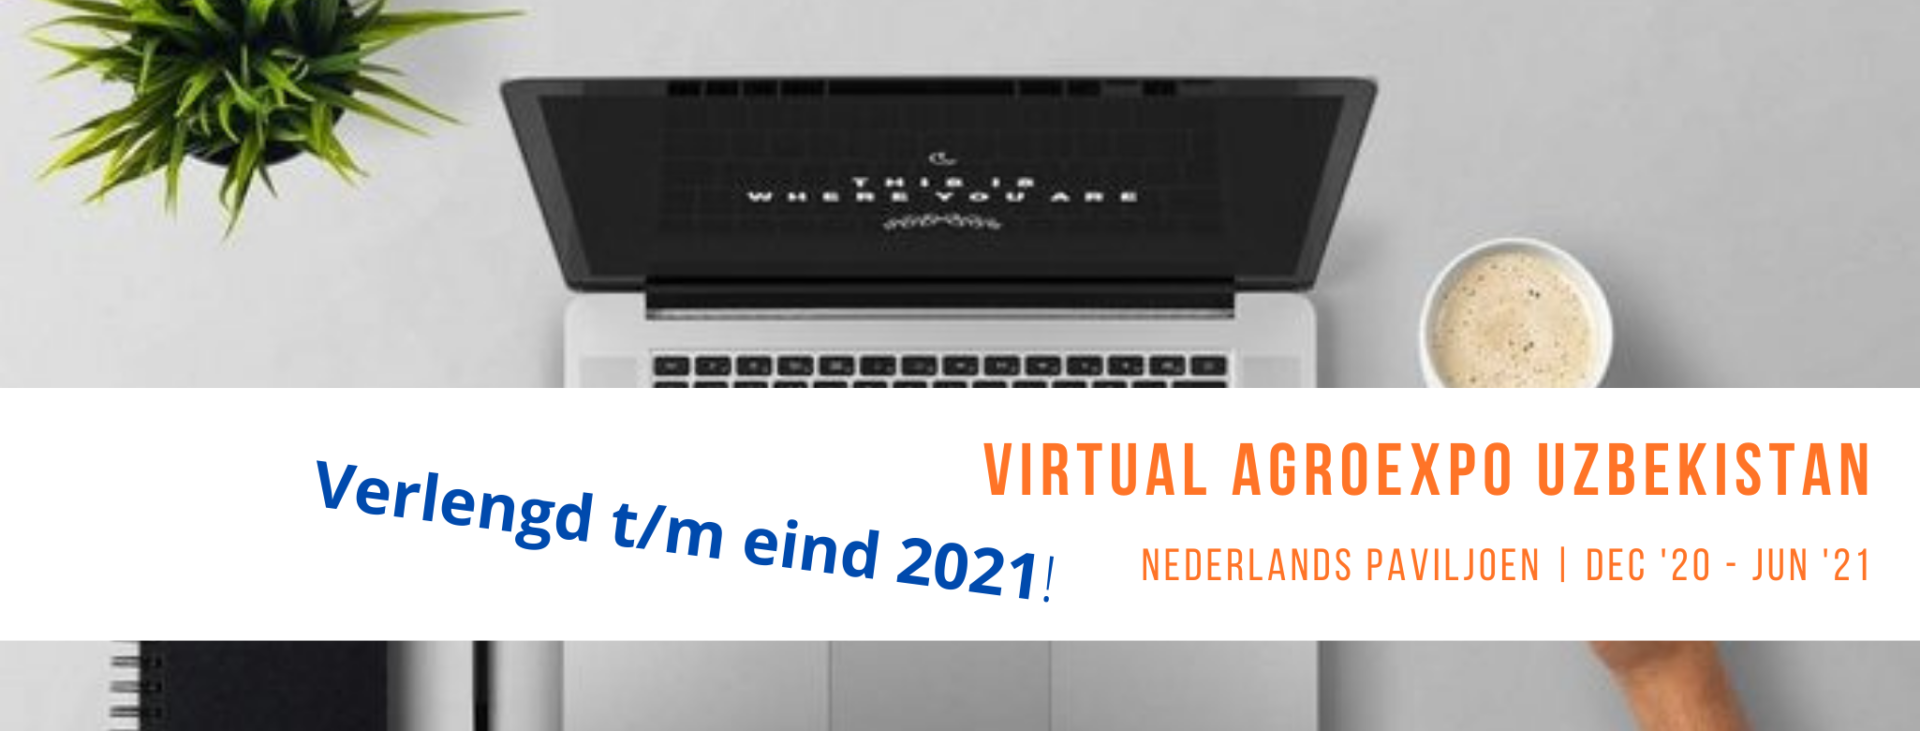 Nederlands Paviljoen Virtual AgroExpo Oezbeksitan